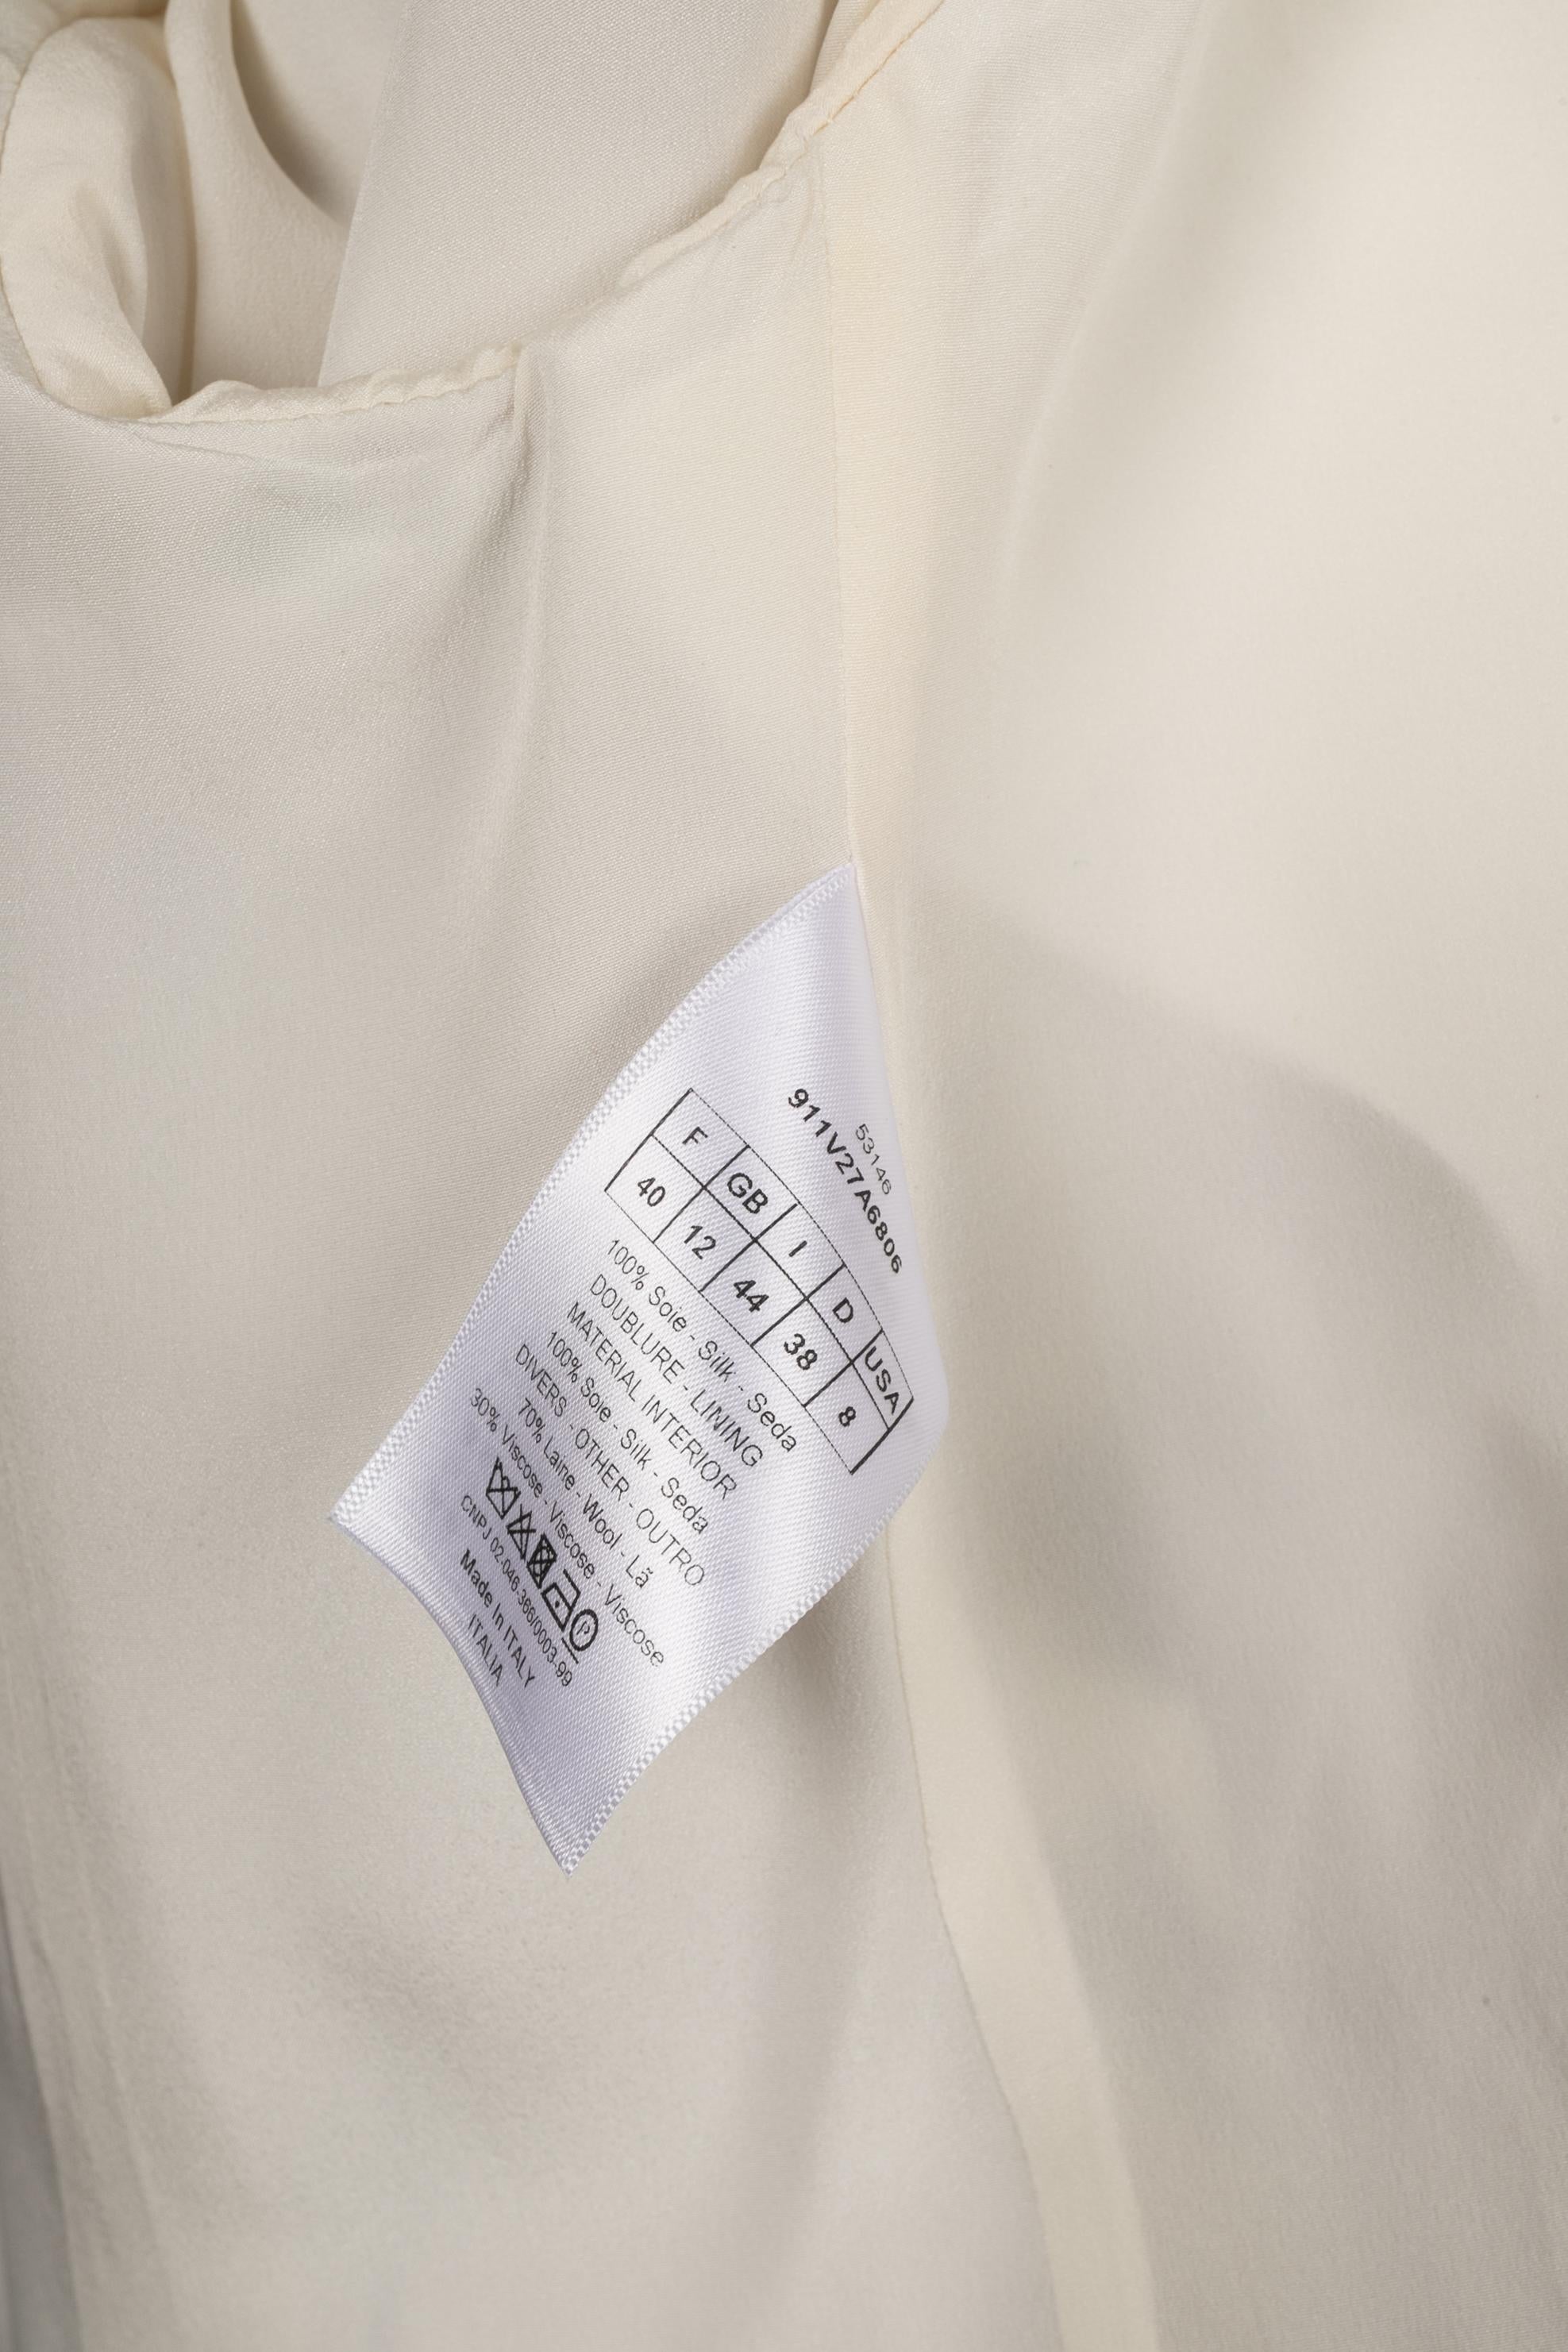 Dior silk jacket For Sale 5